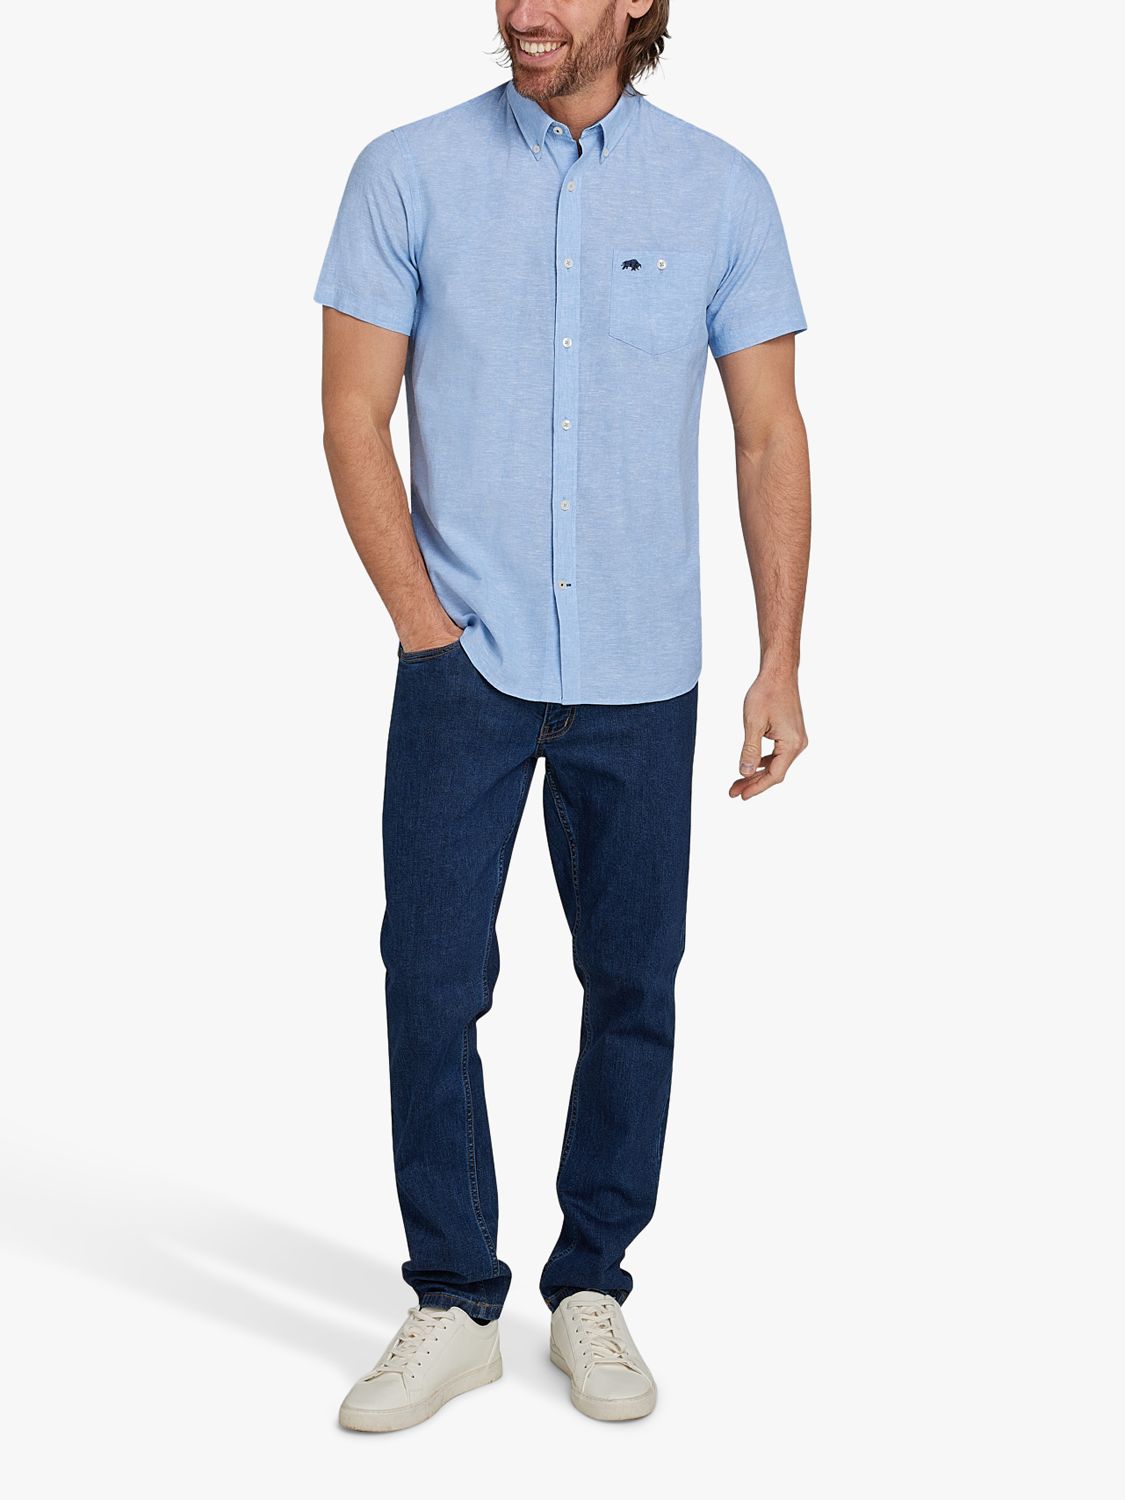 Raging Bull Classic Linen Short Sleeve Shirt, Blue, L